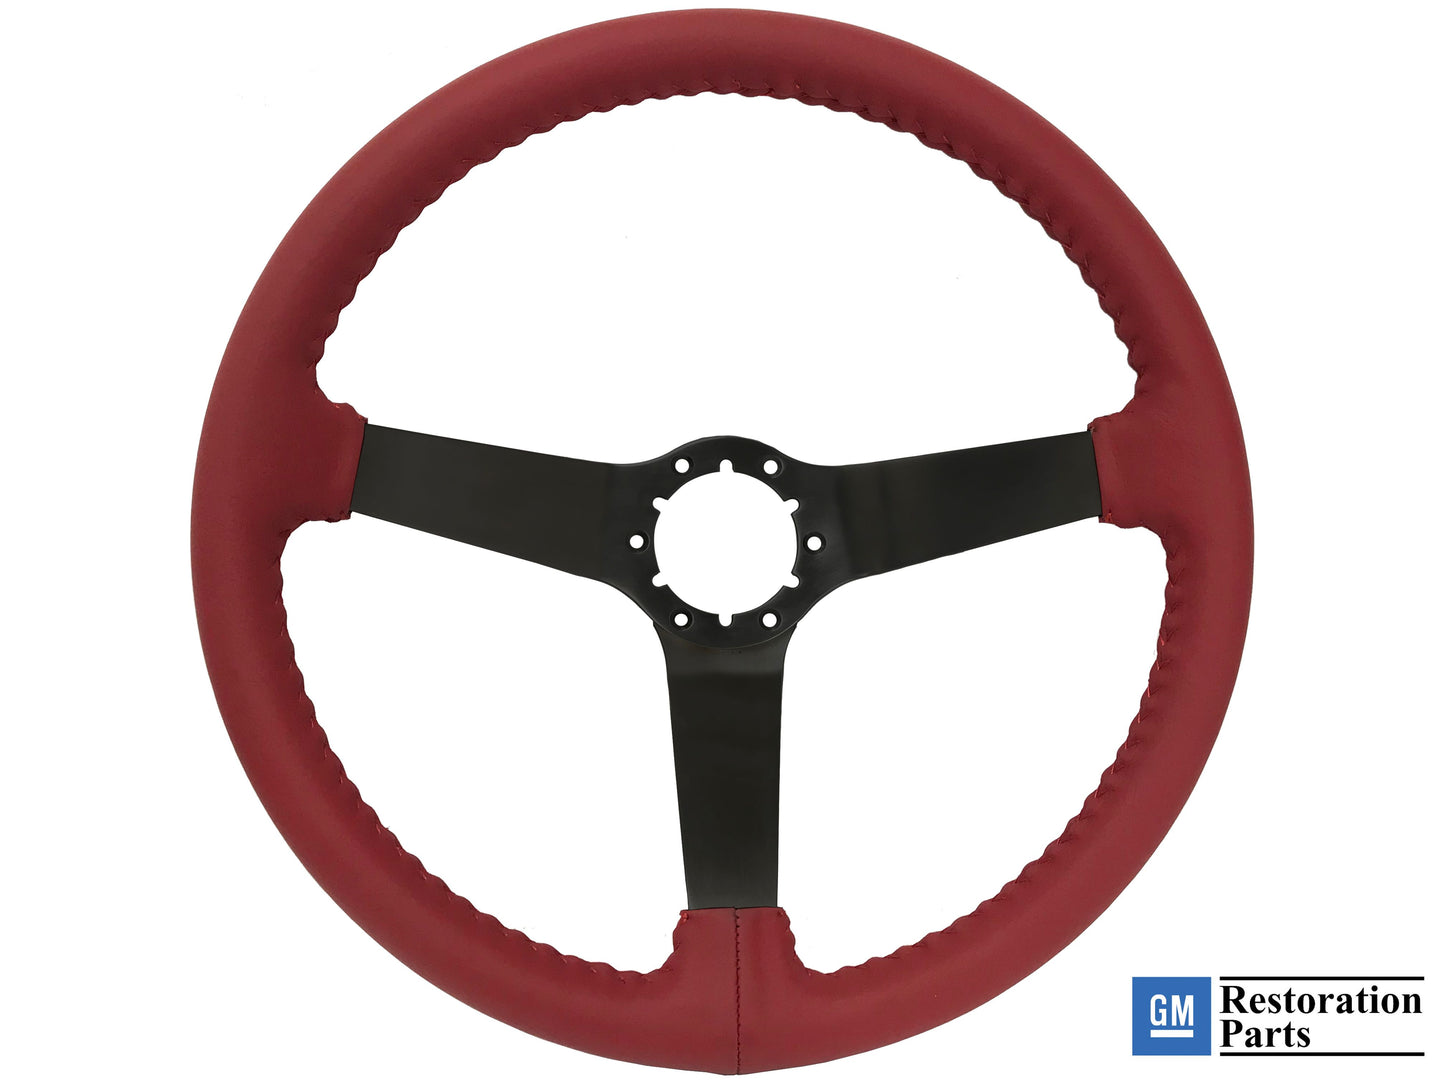 VSW S6 Step Series Steering Wheel | Red Leather, Black | ST3029RED